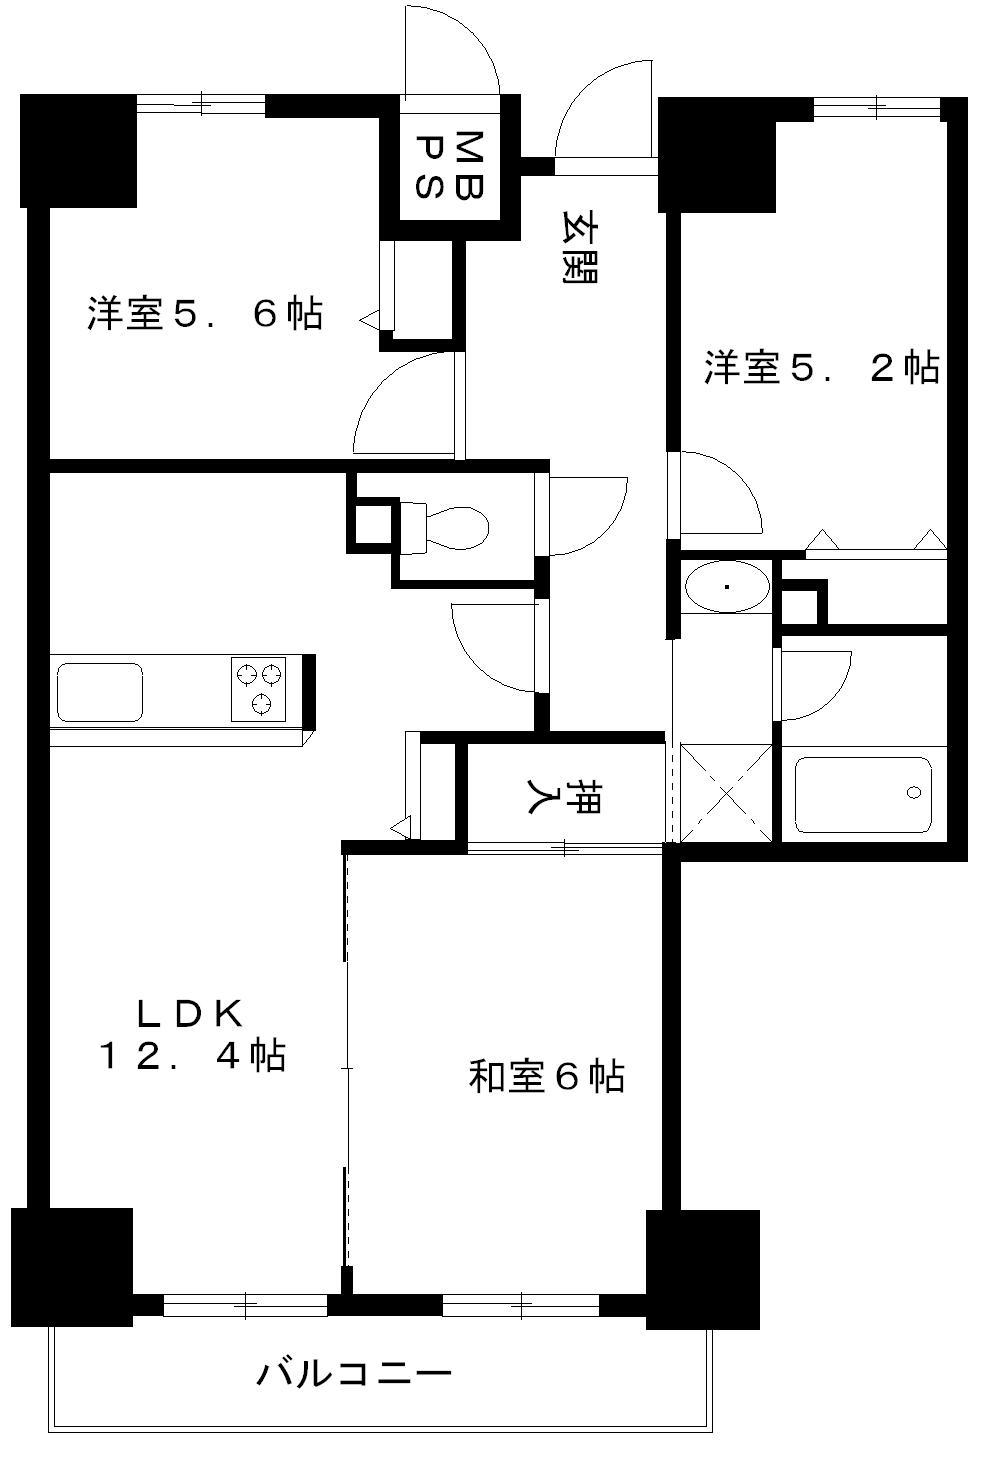 Floor plan. 3LDK, Price 16.8 million yen, Occupied area 65.58 sq m , Balcony area 5.93 sq m